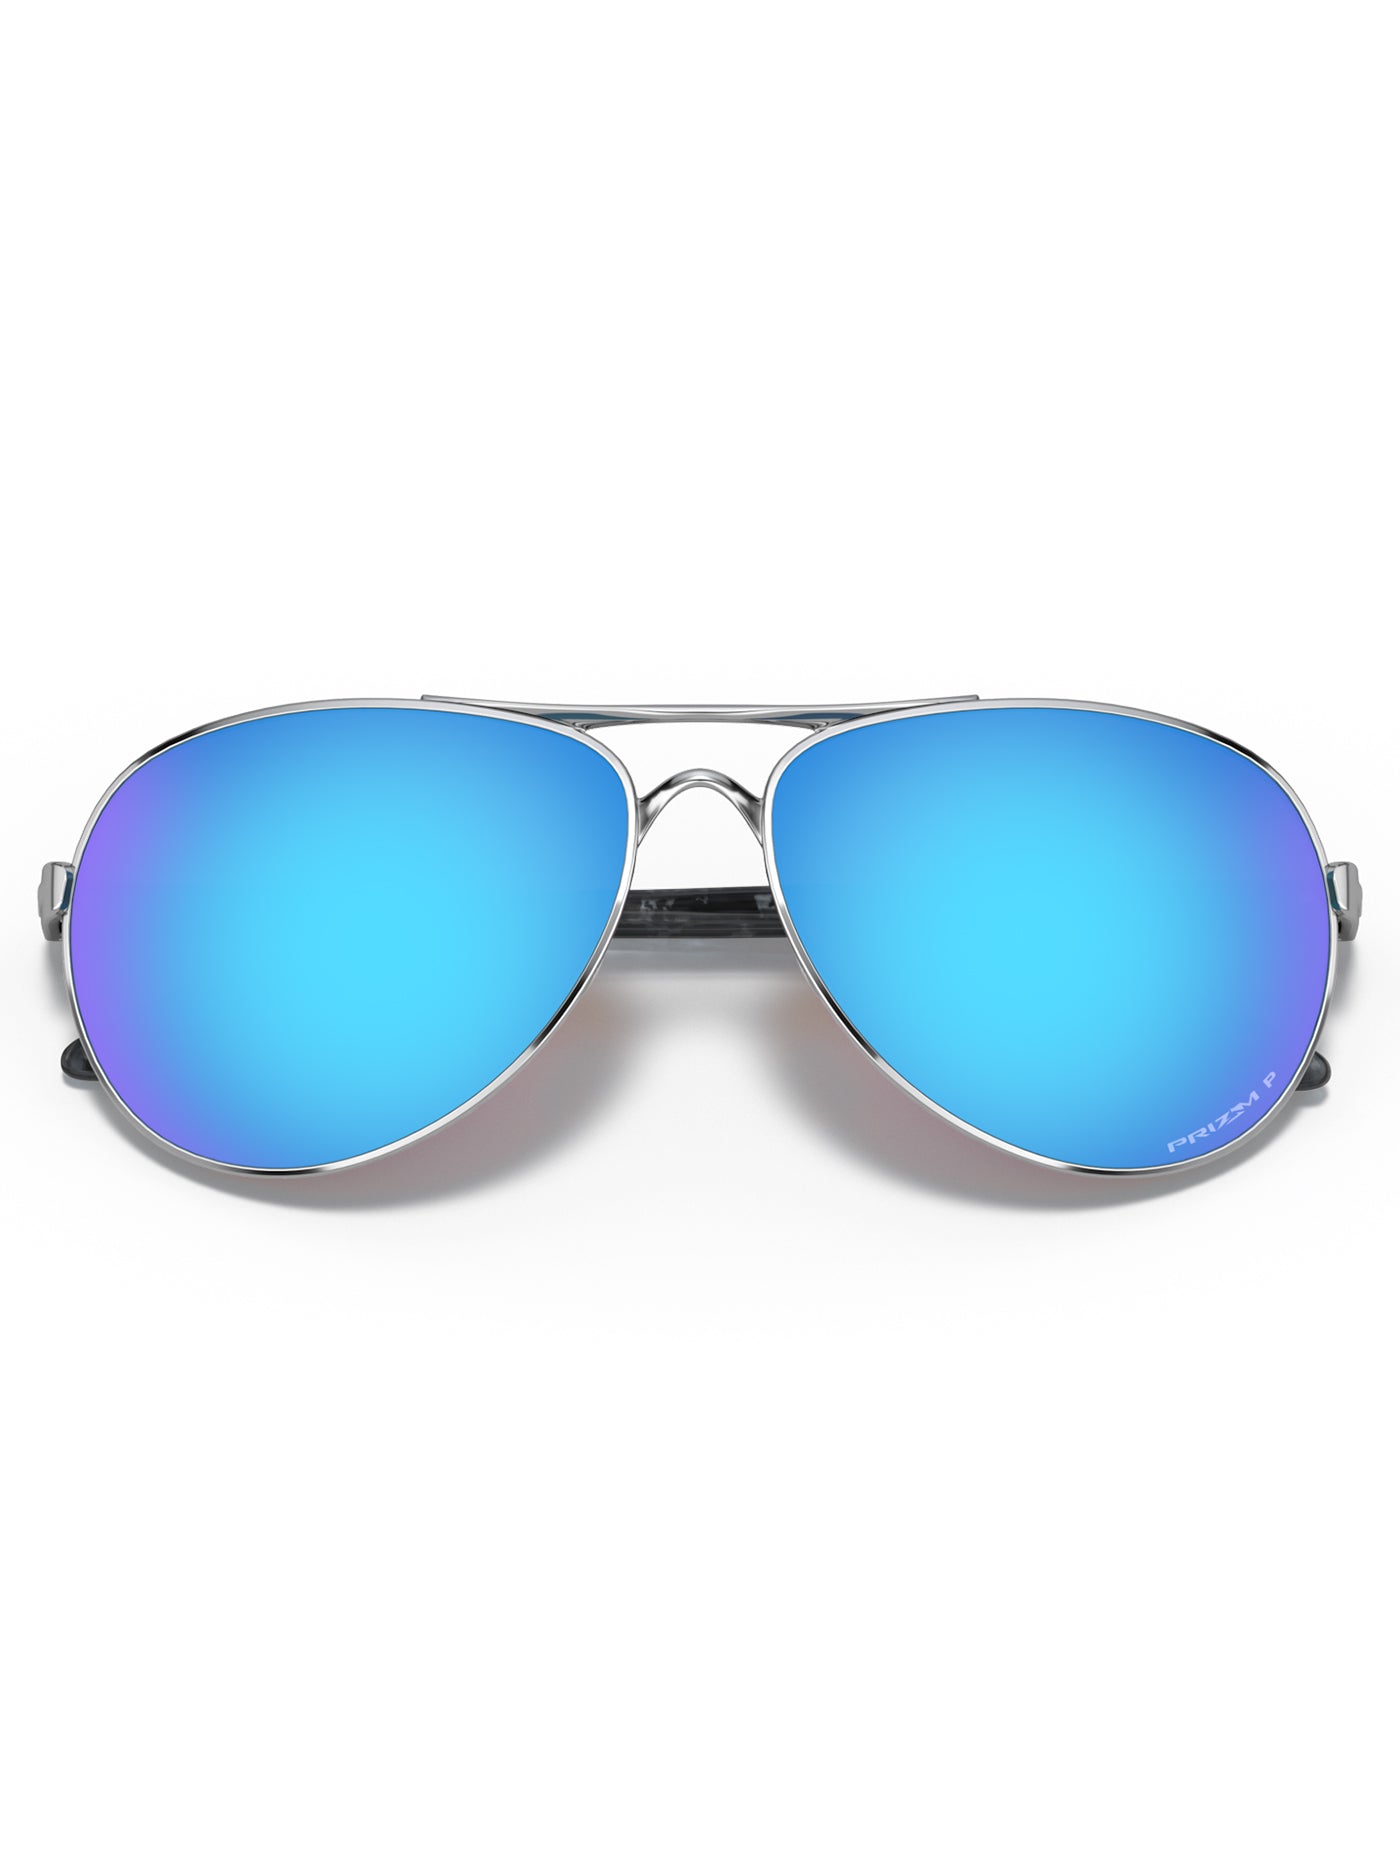 Oakley Feedback Polished Chrome/Prizm Sapphire Sunglasses